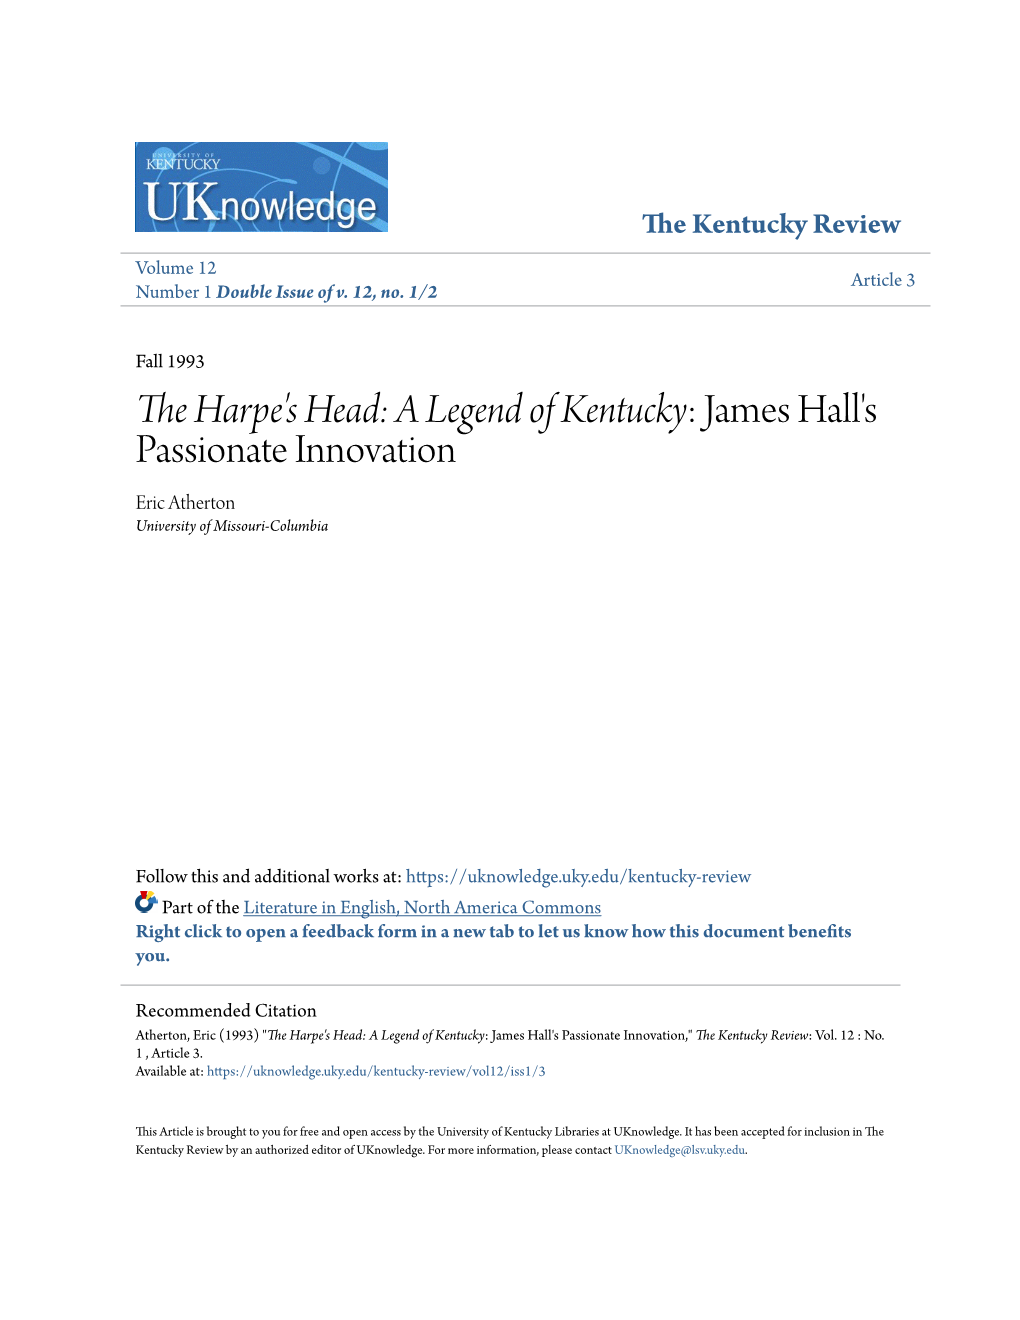 The Harpe's Head: a Legend of Kentucky: James Hall's Passionate Innovation Eric Atherton University of Missouri-Columbia